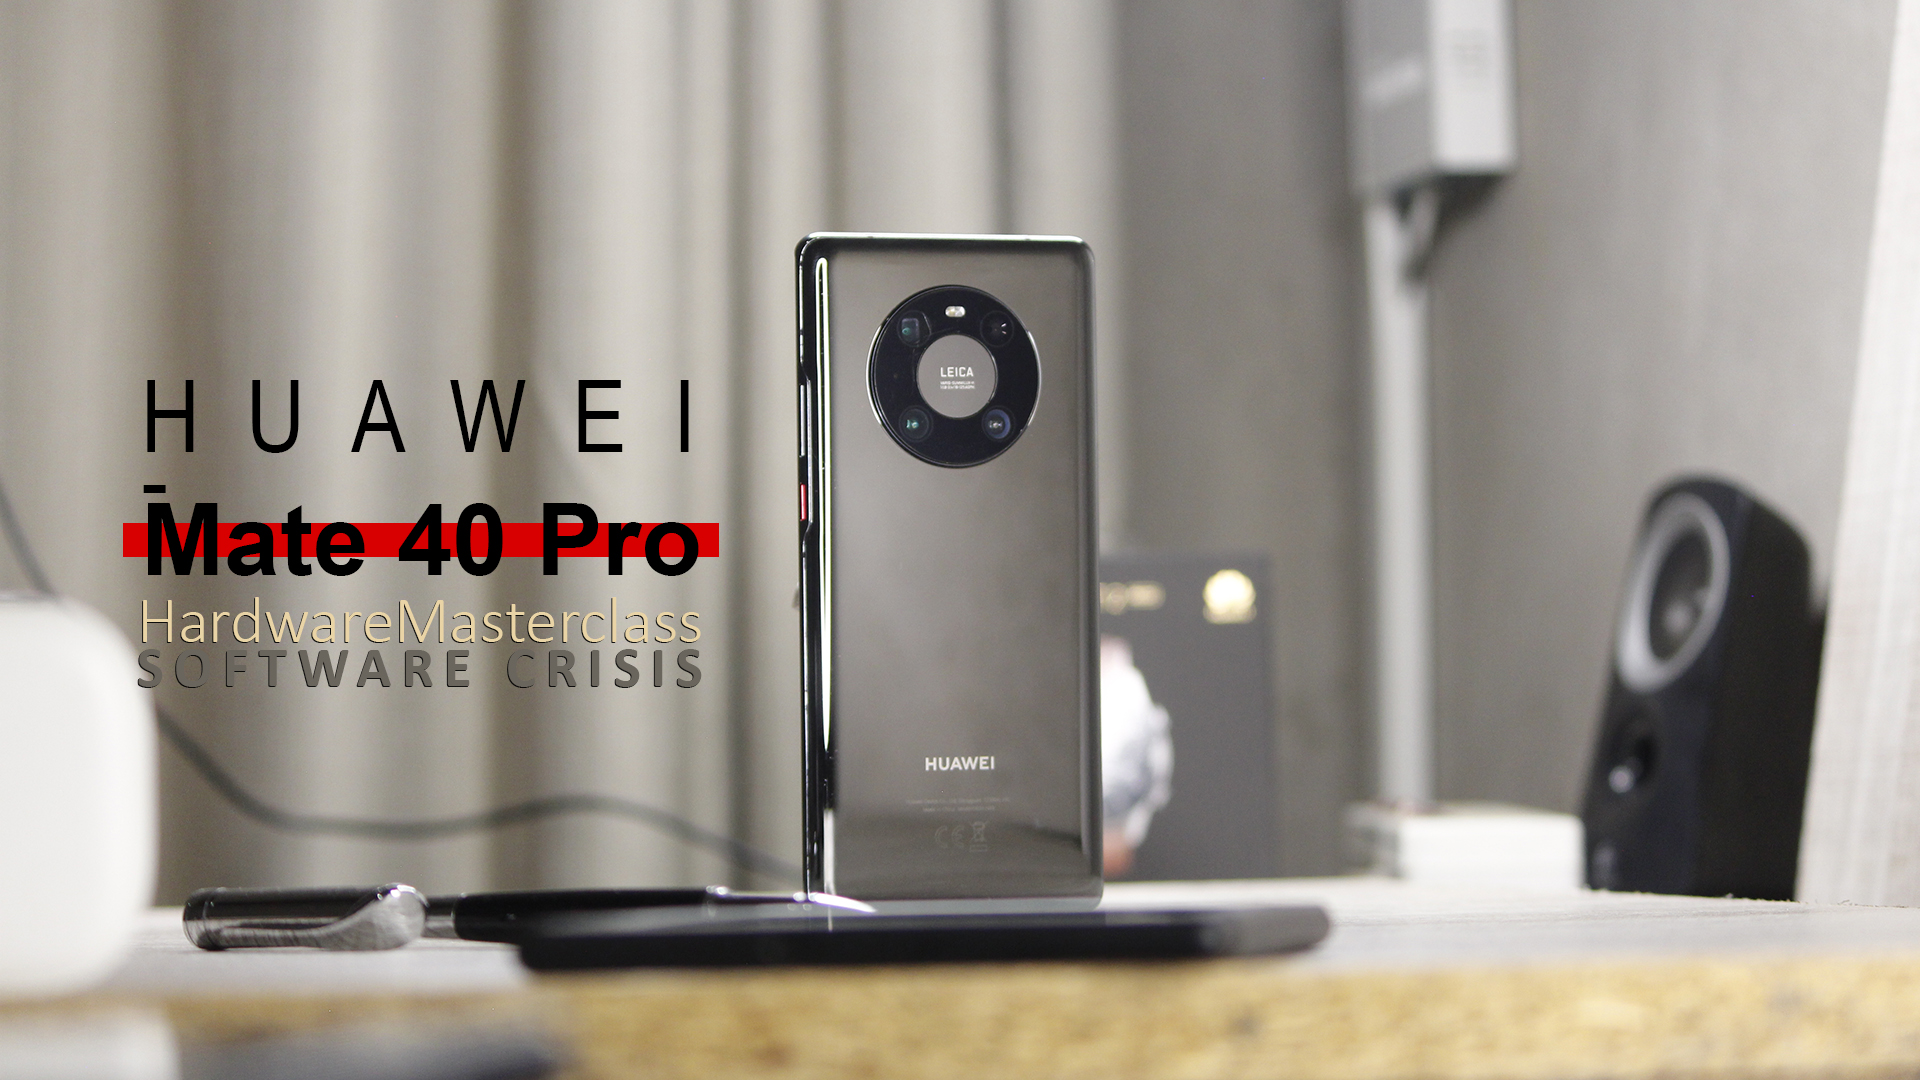 Huawei Mate 40 Pro -  External Reviews